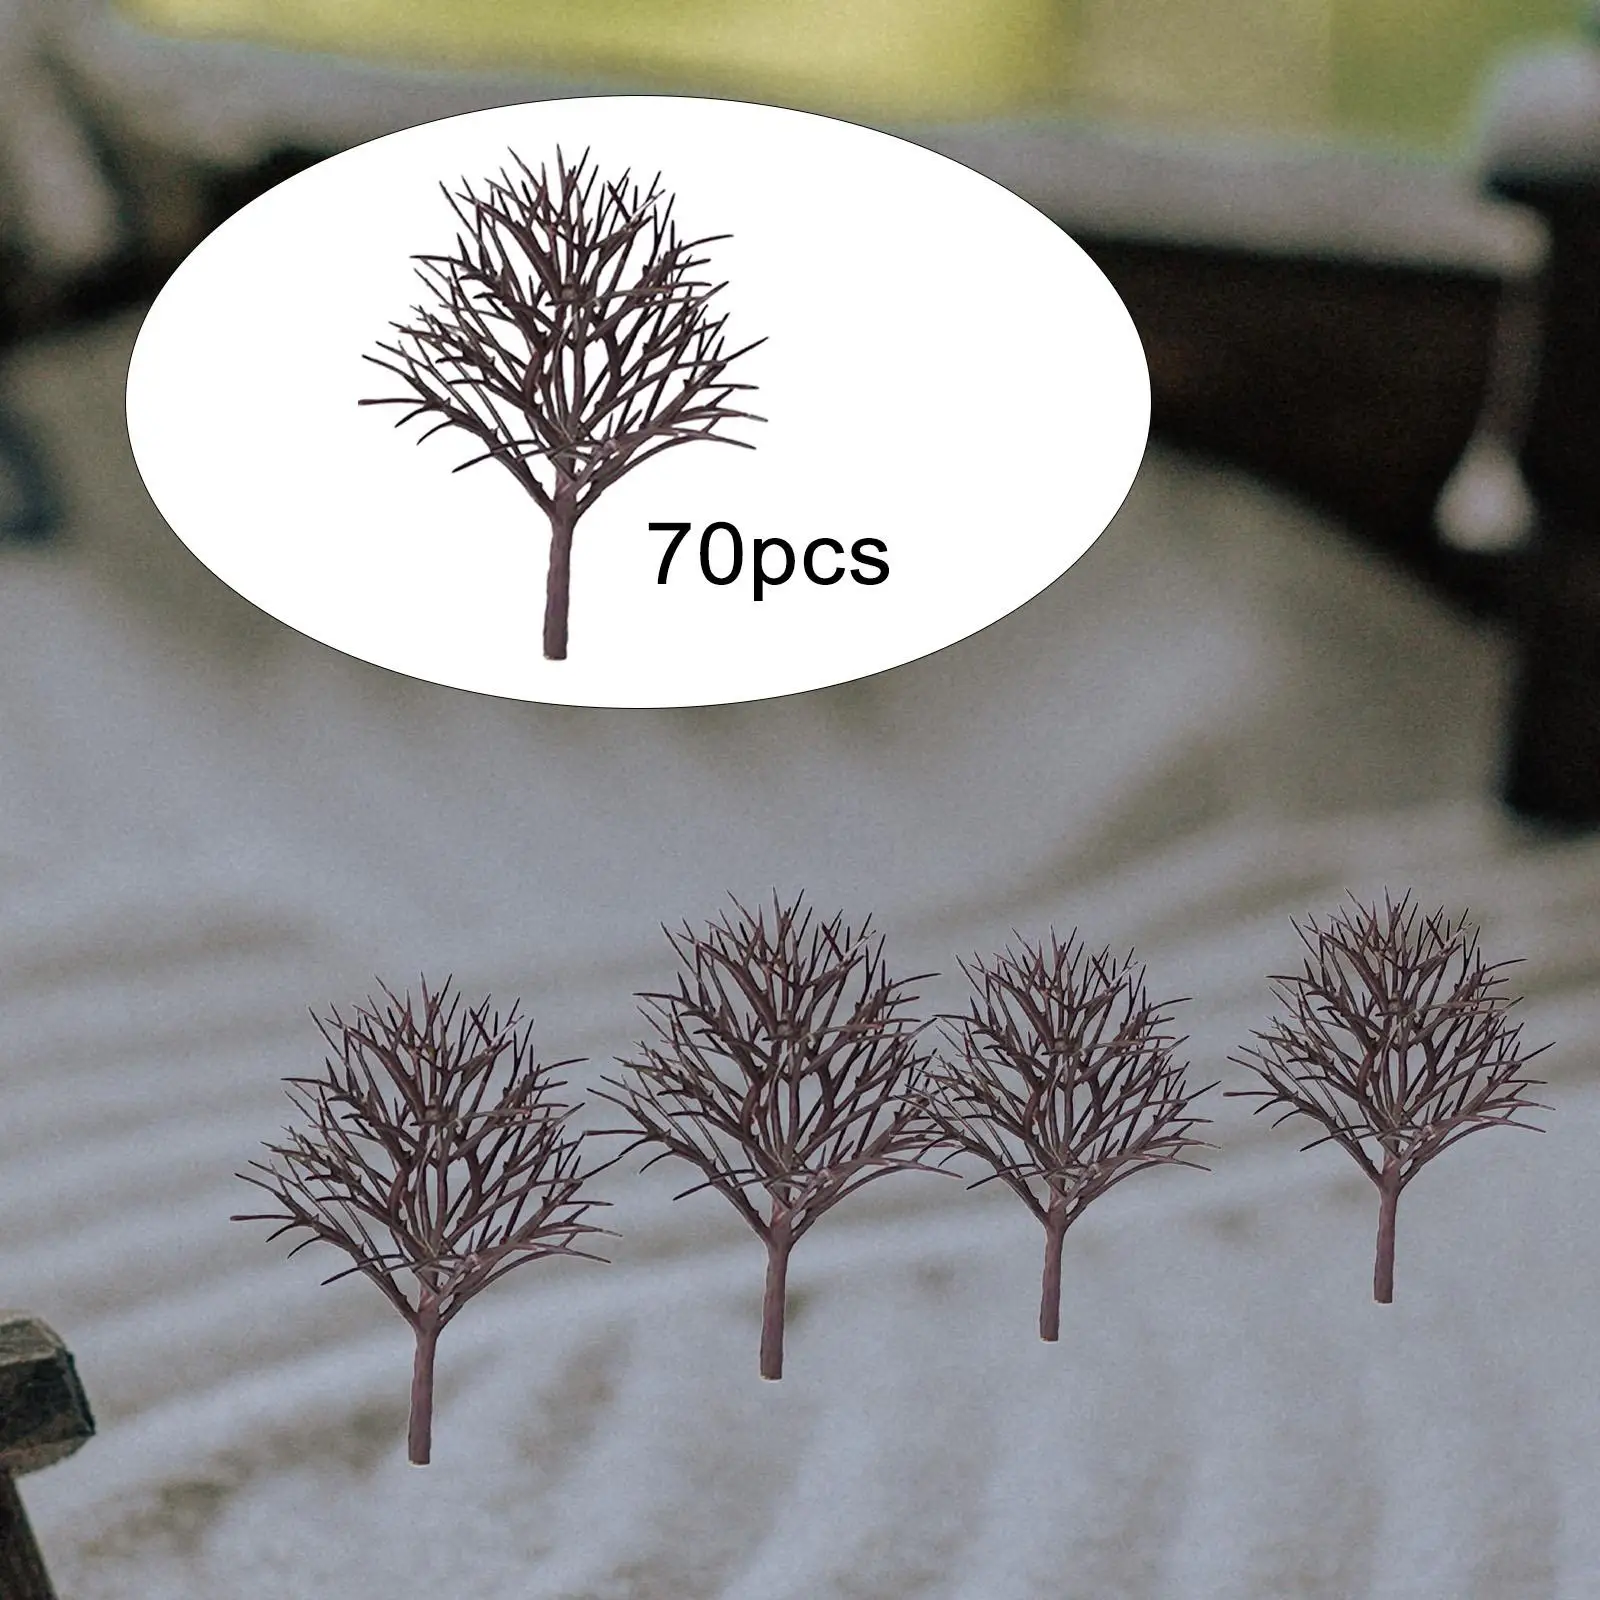 70Pcs Mini Model Trees Diorama Supplies Scenery Tree Miniature Trees Model for Sand Table Landscape Scenery Scene Layout Train